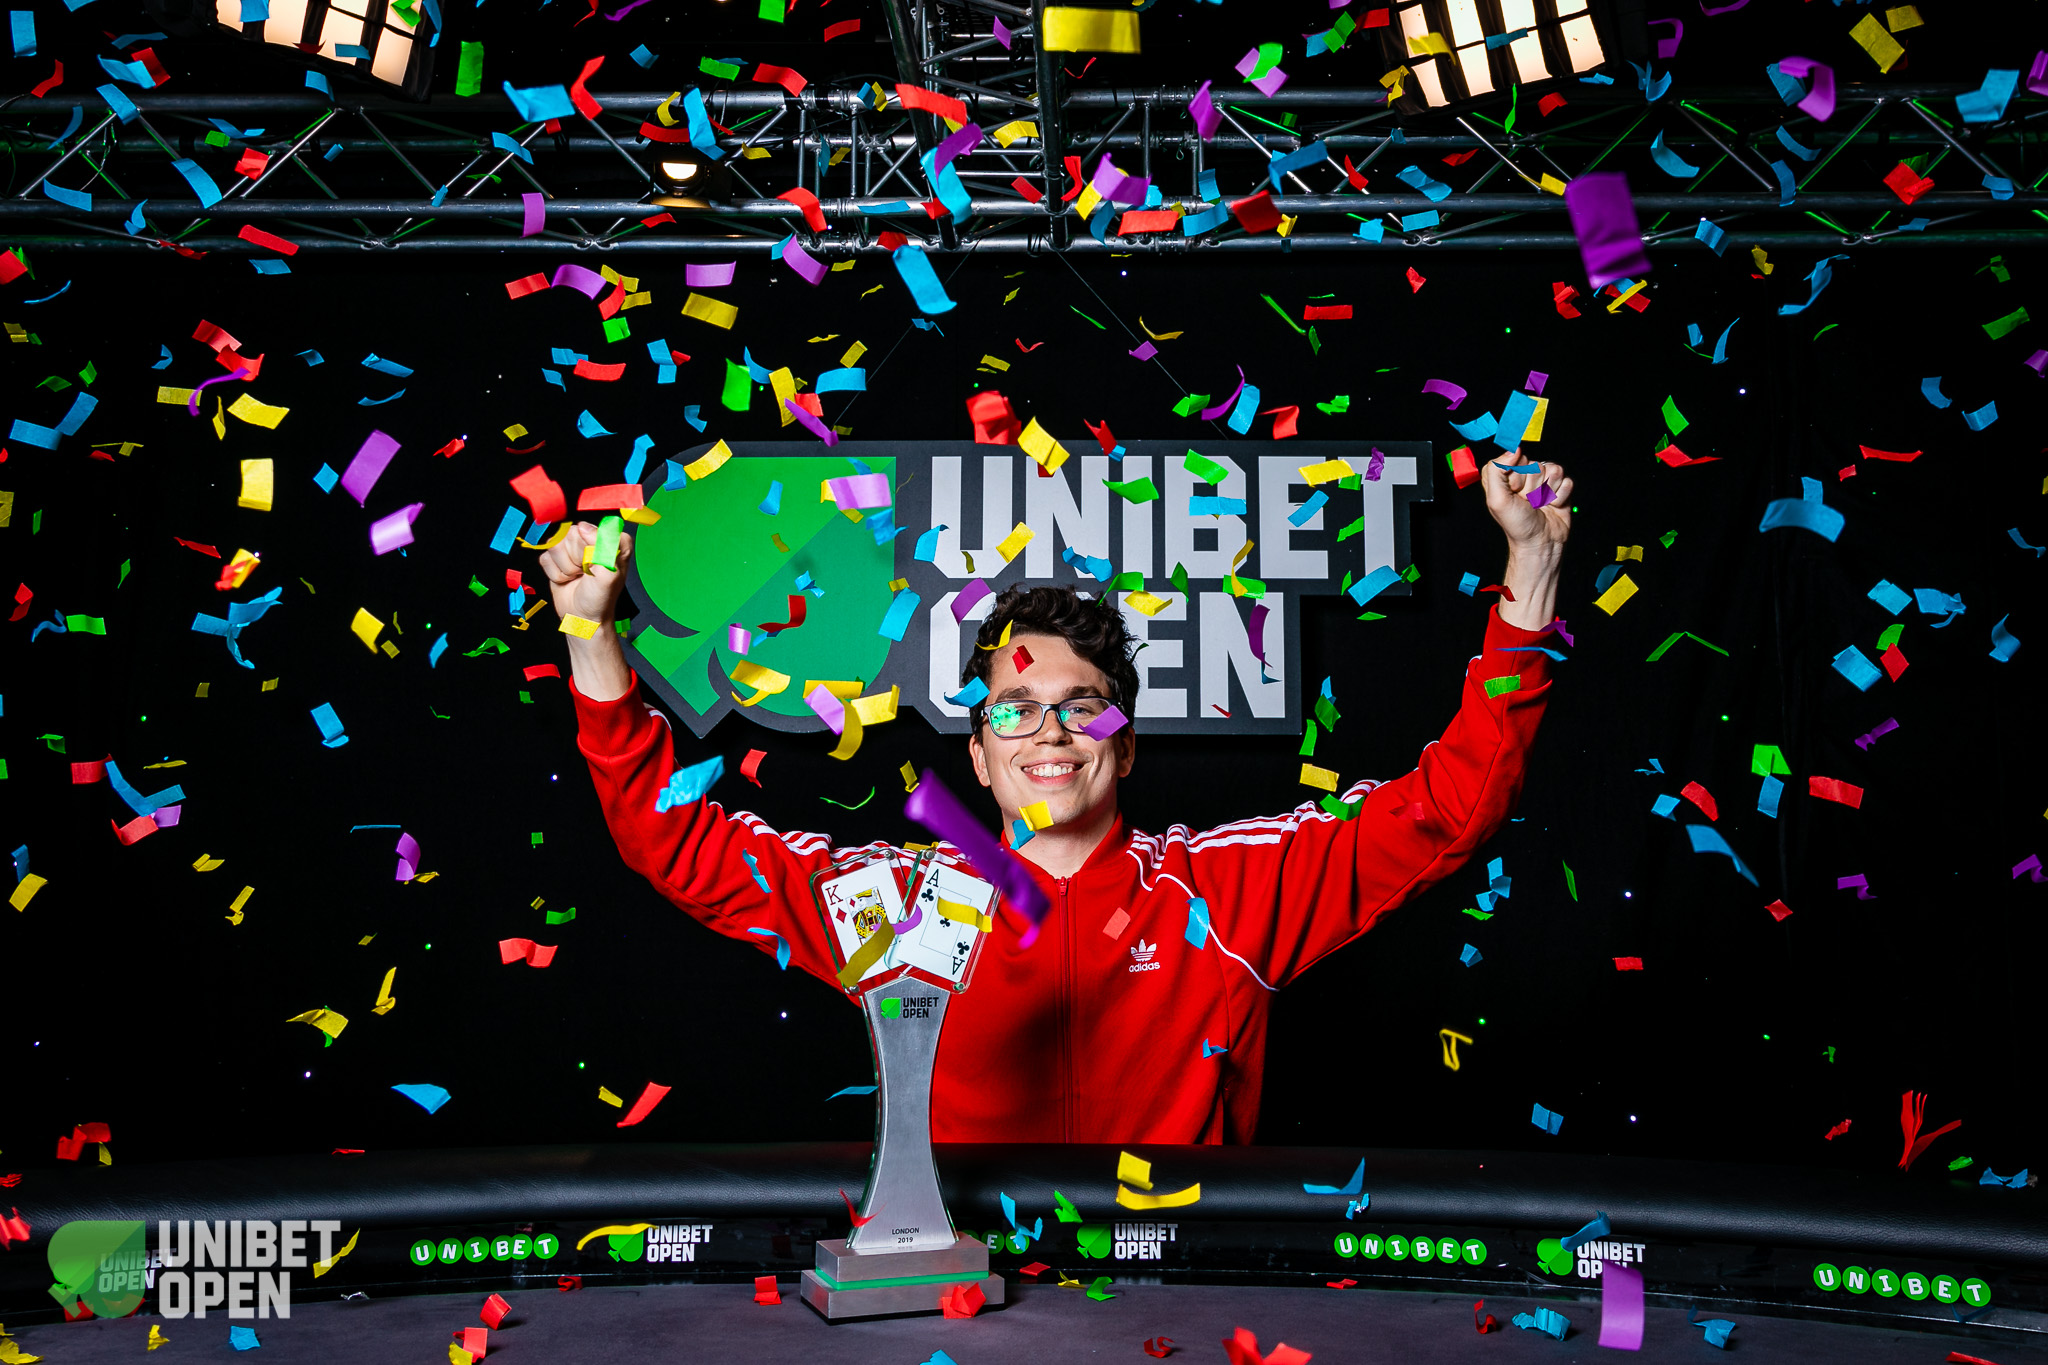 Unibet Open London Breaks Records as Daniel James Triumphs